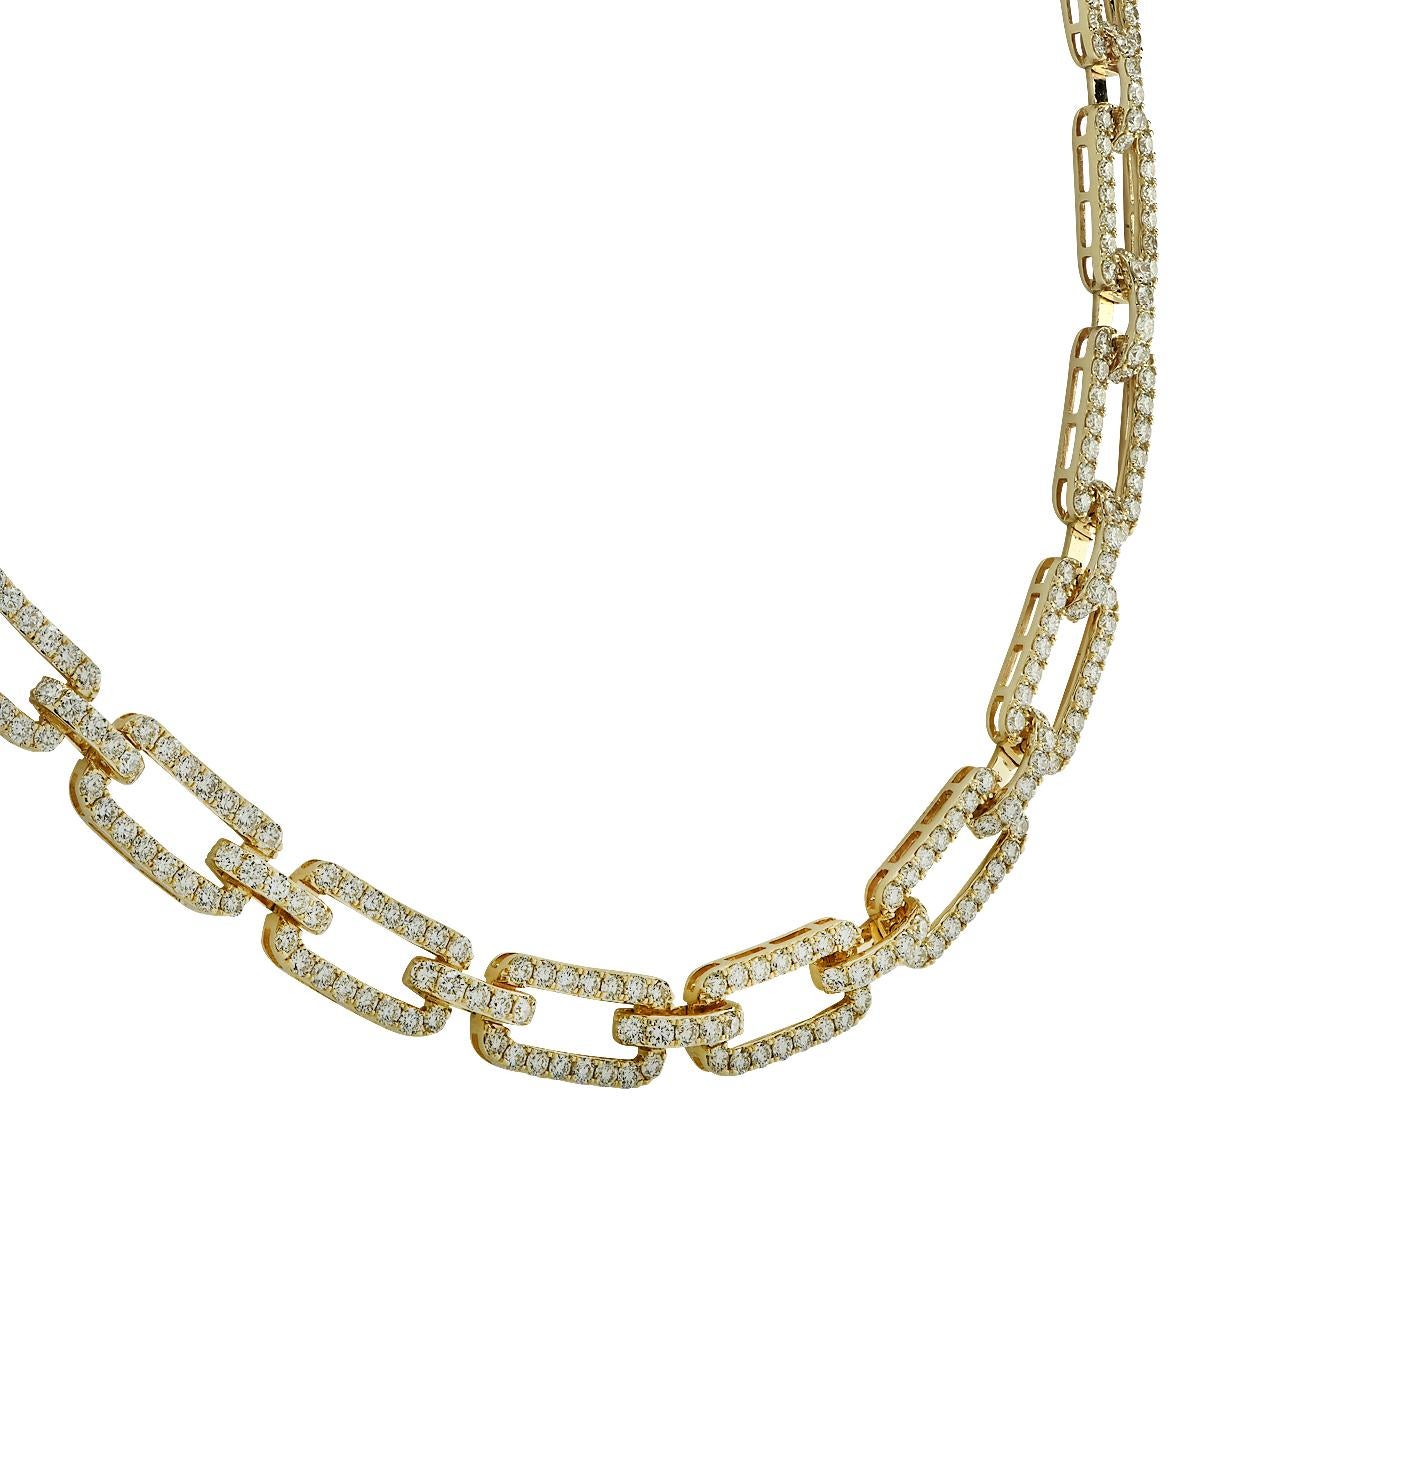 Round Cut Vivid Diamonds 12.45 Carat Diamond Necklace